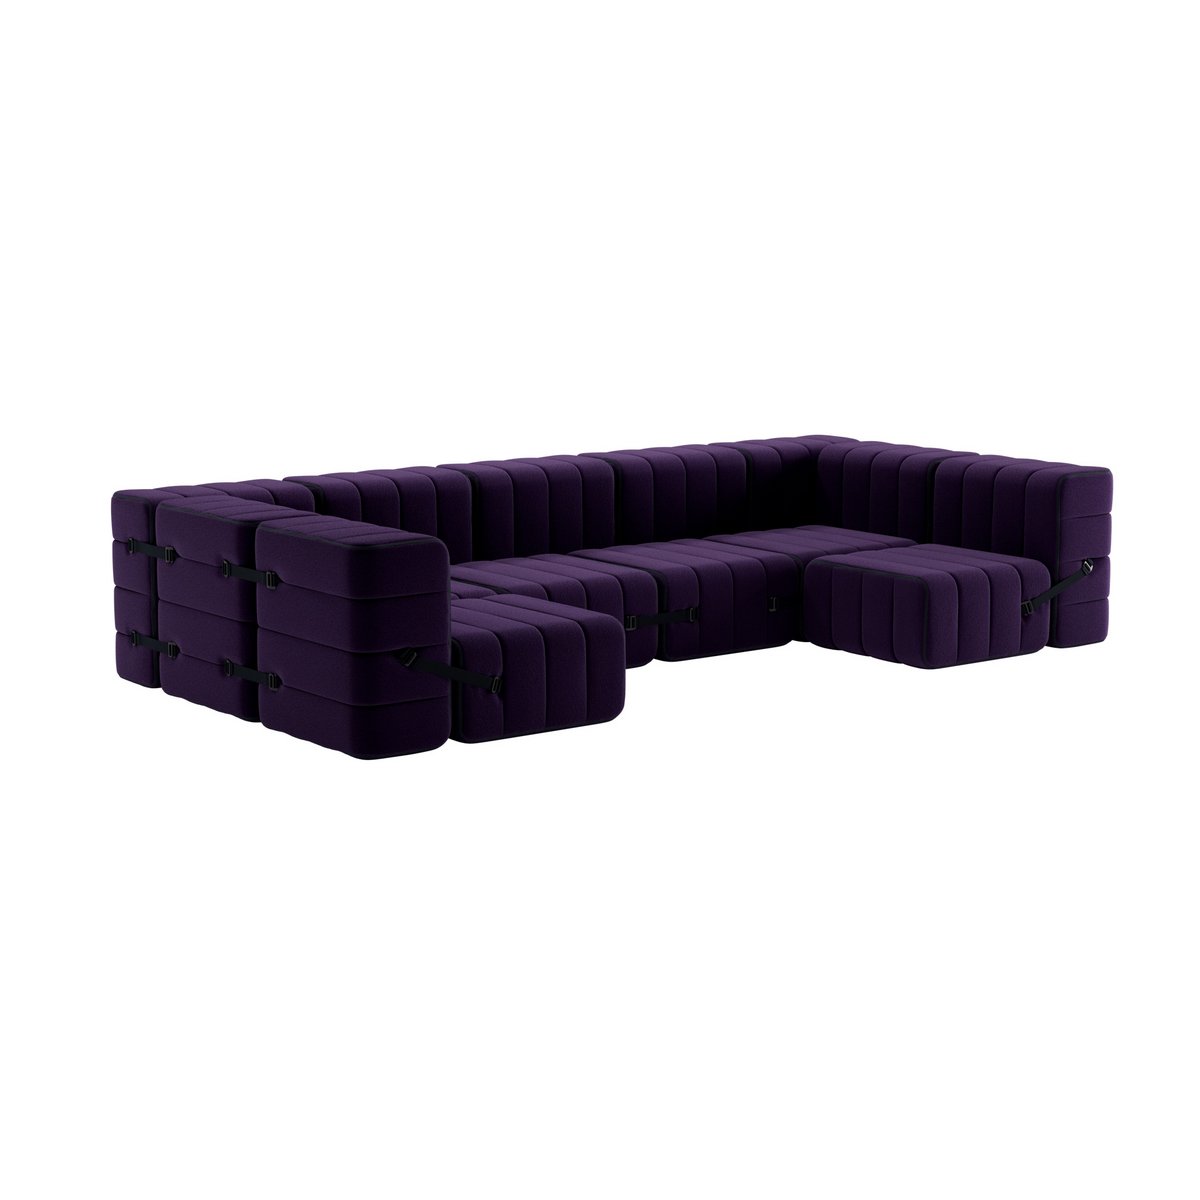 Curt-Set 15 - e.g. Flexible U-shaped sofa